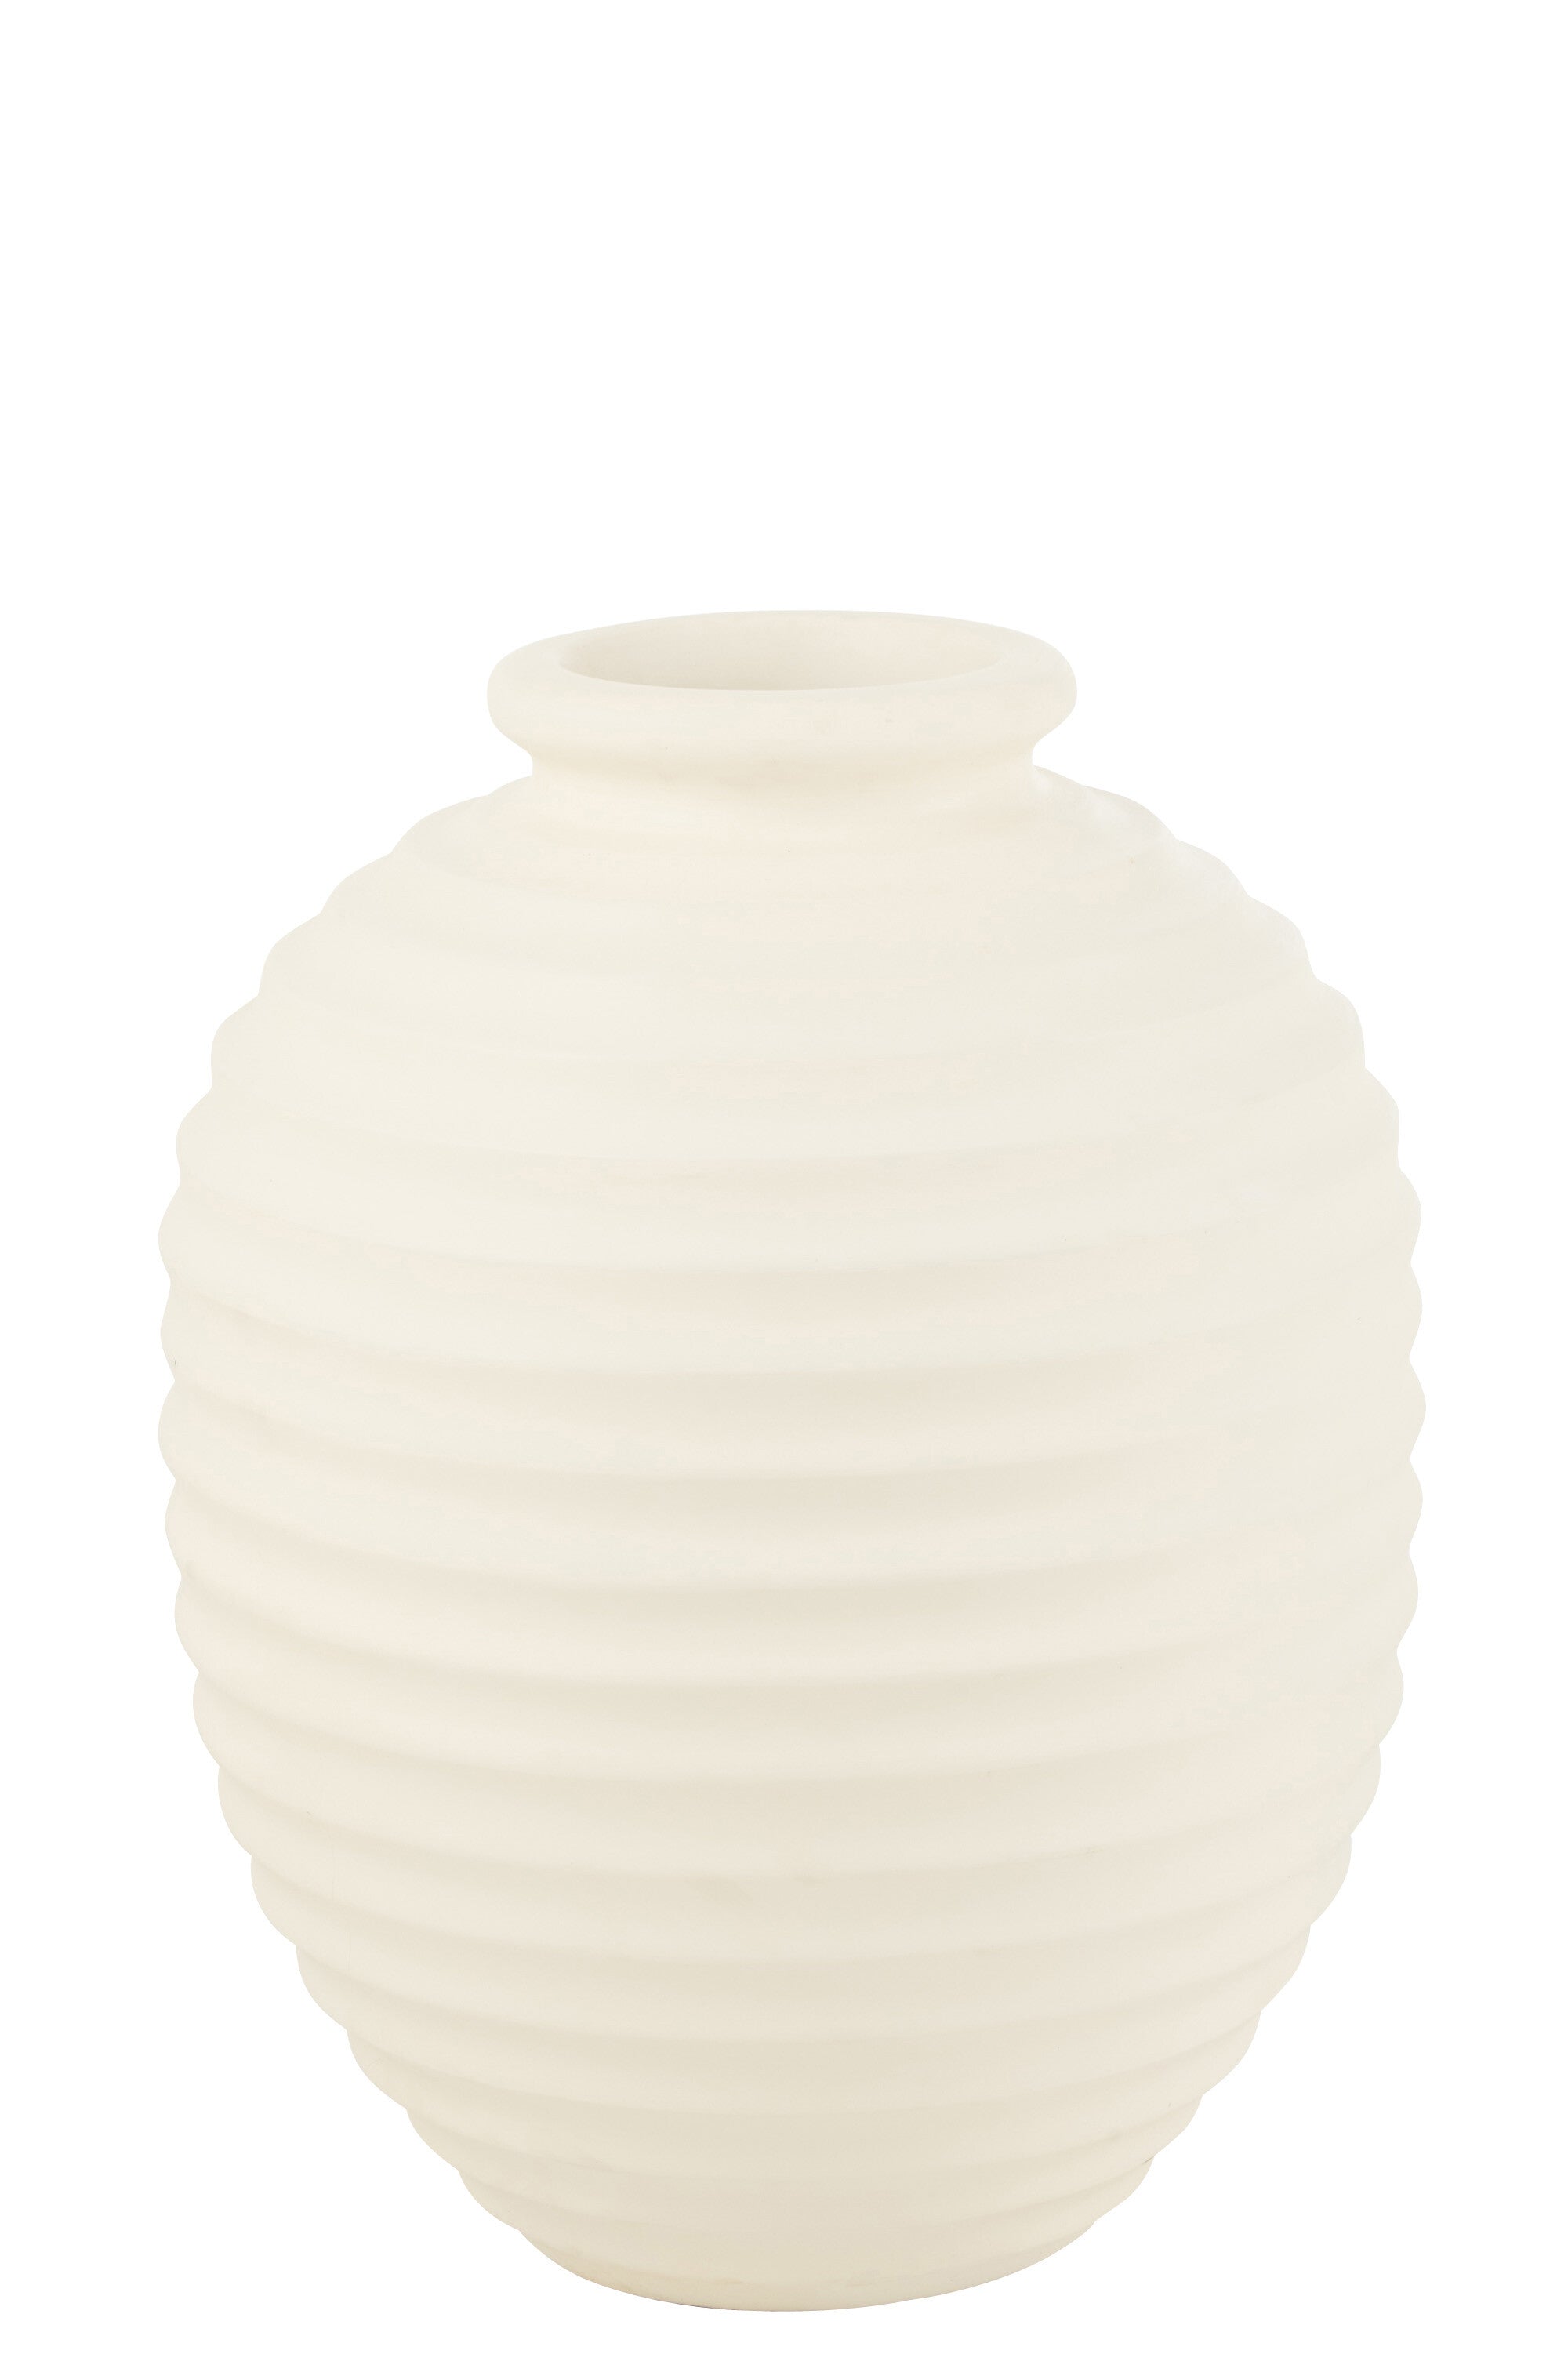 Deko Vase Oval Terracotta Weiß Large